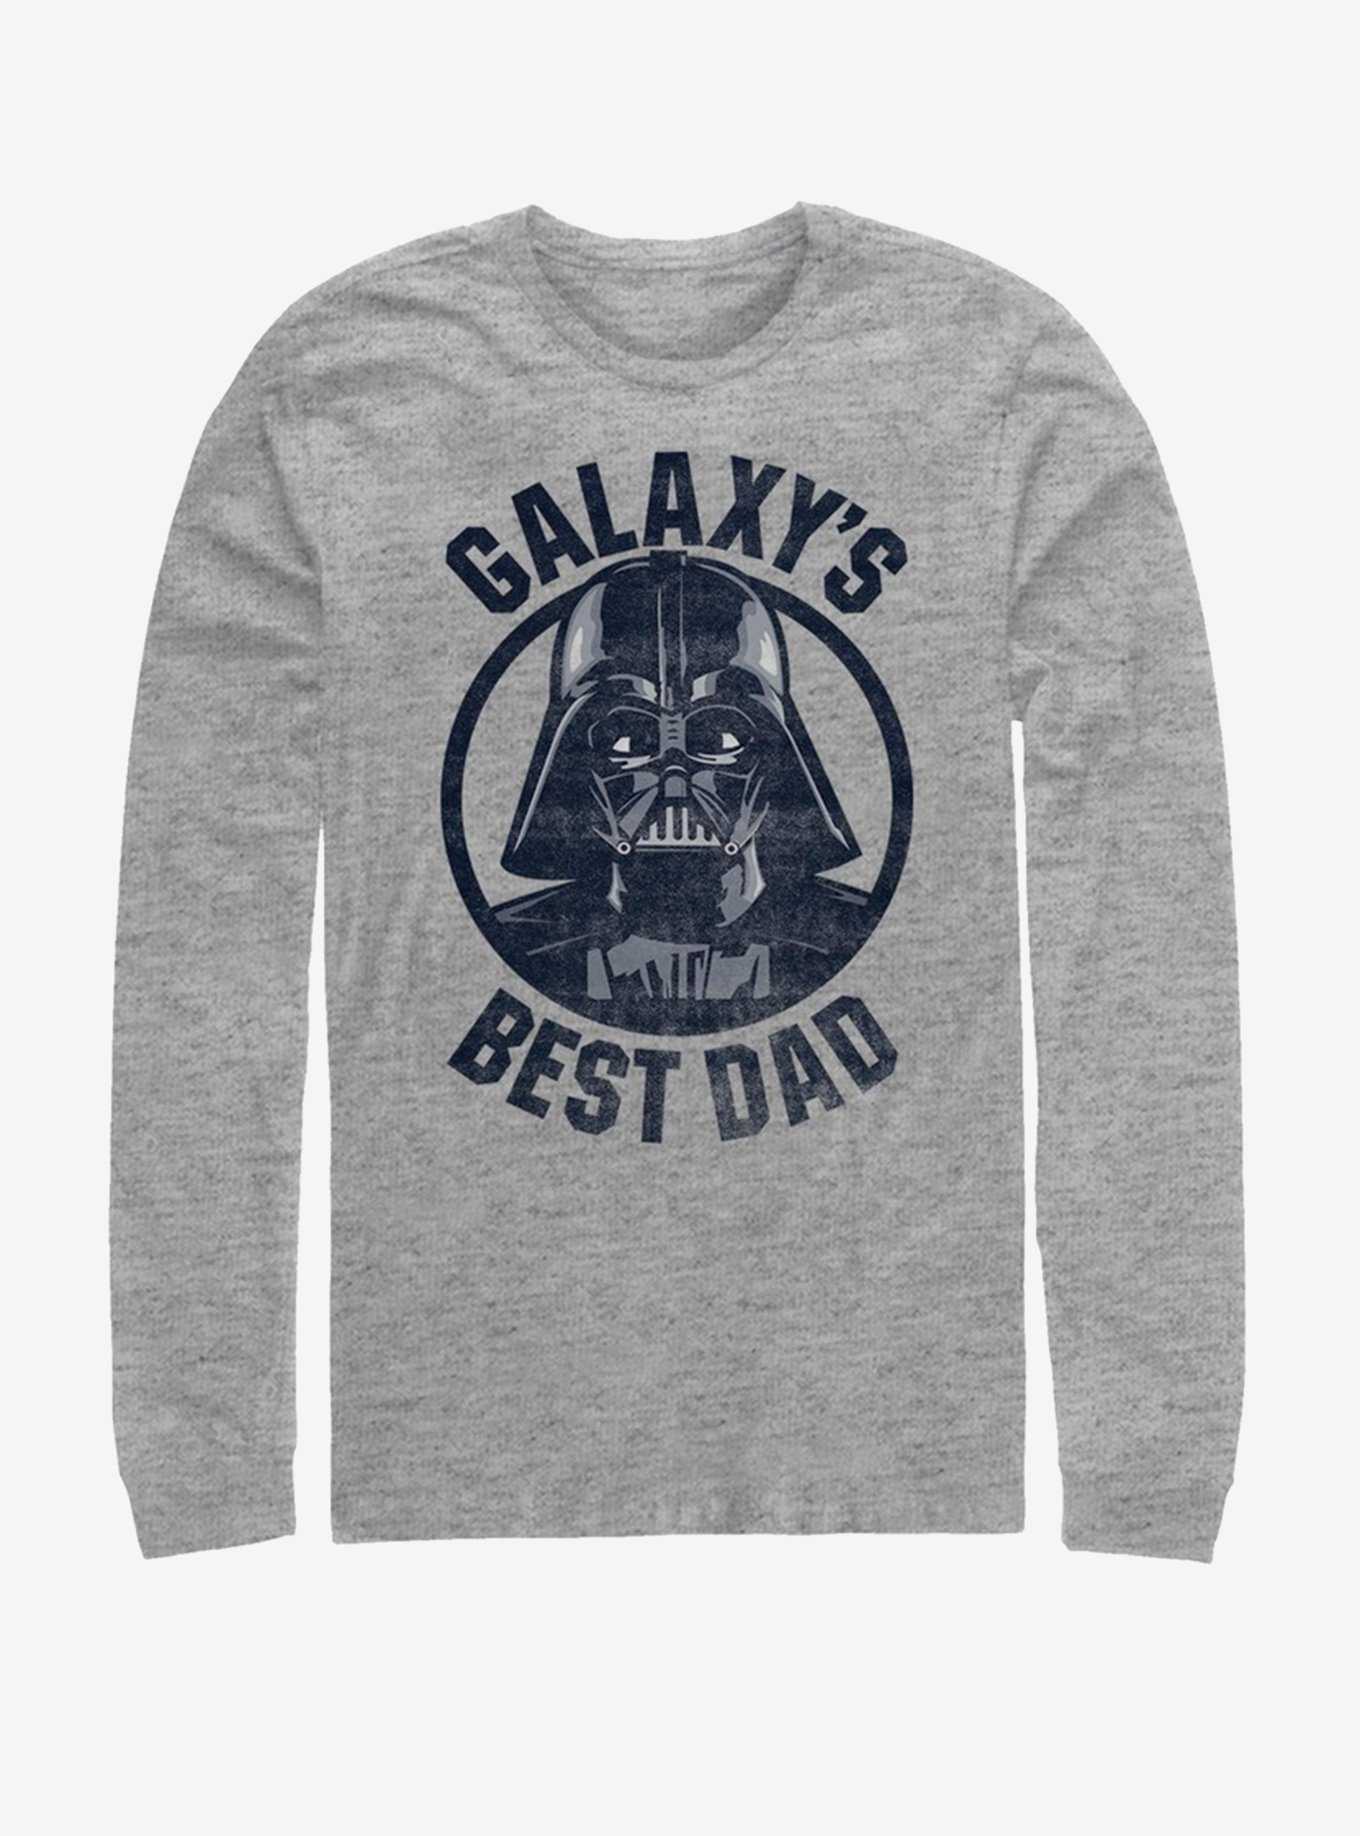 Star Wars Galaxy Dad Long-Sleeve T-Shirt, , hi-res